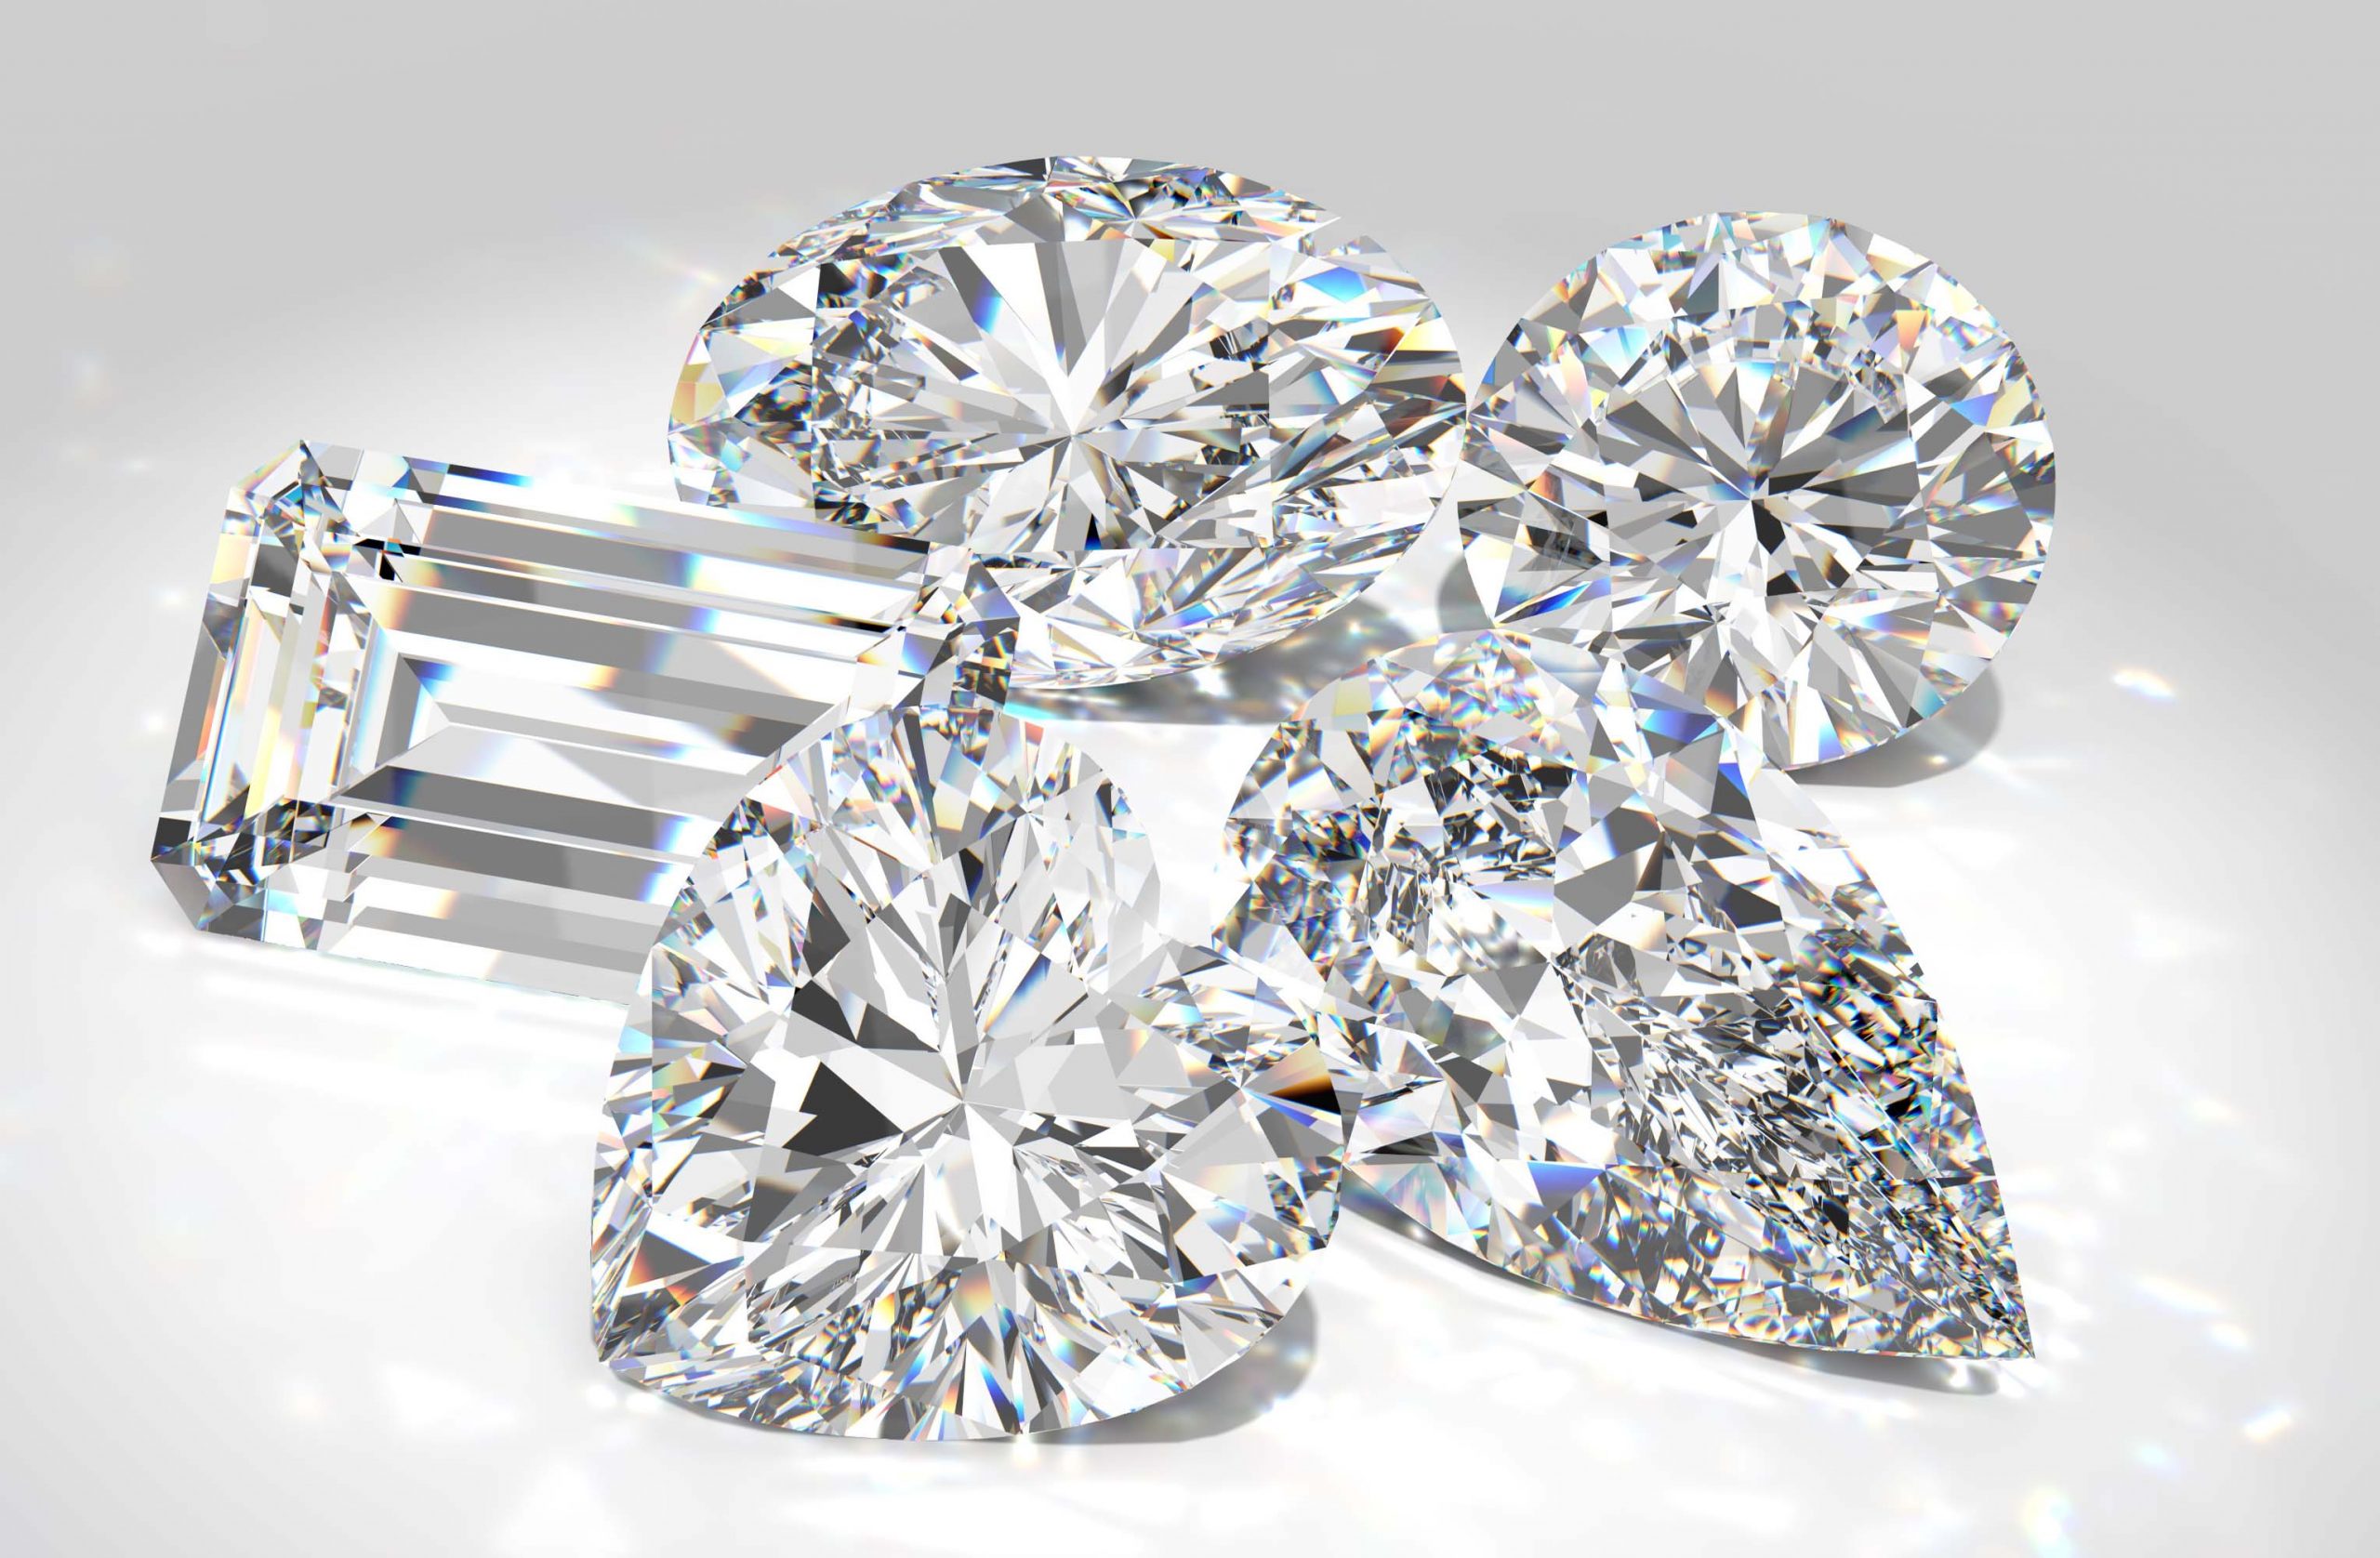 different diamond shapes